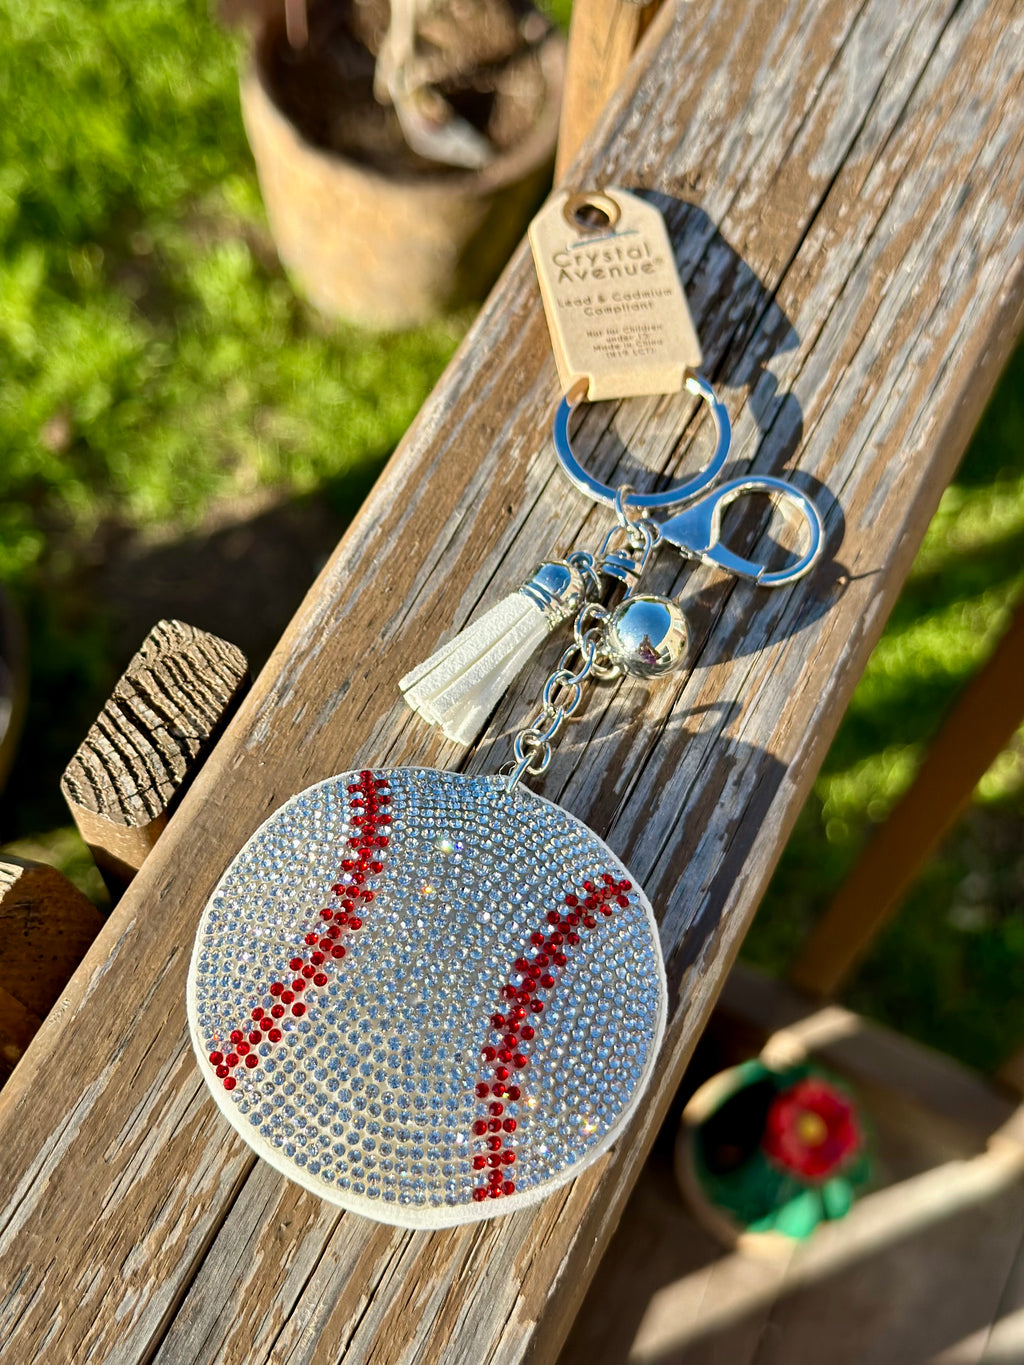 Baseball Keychain